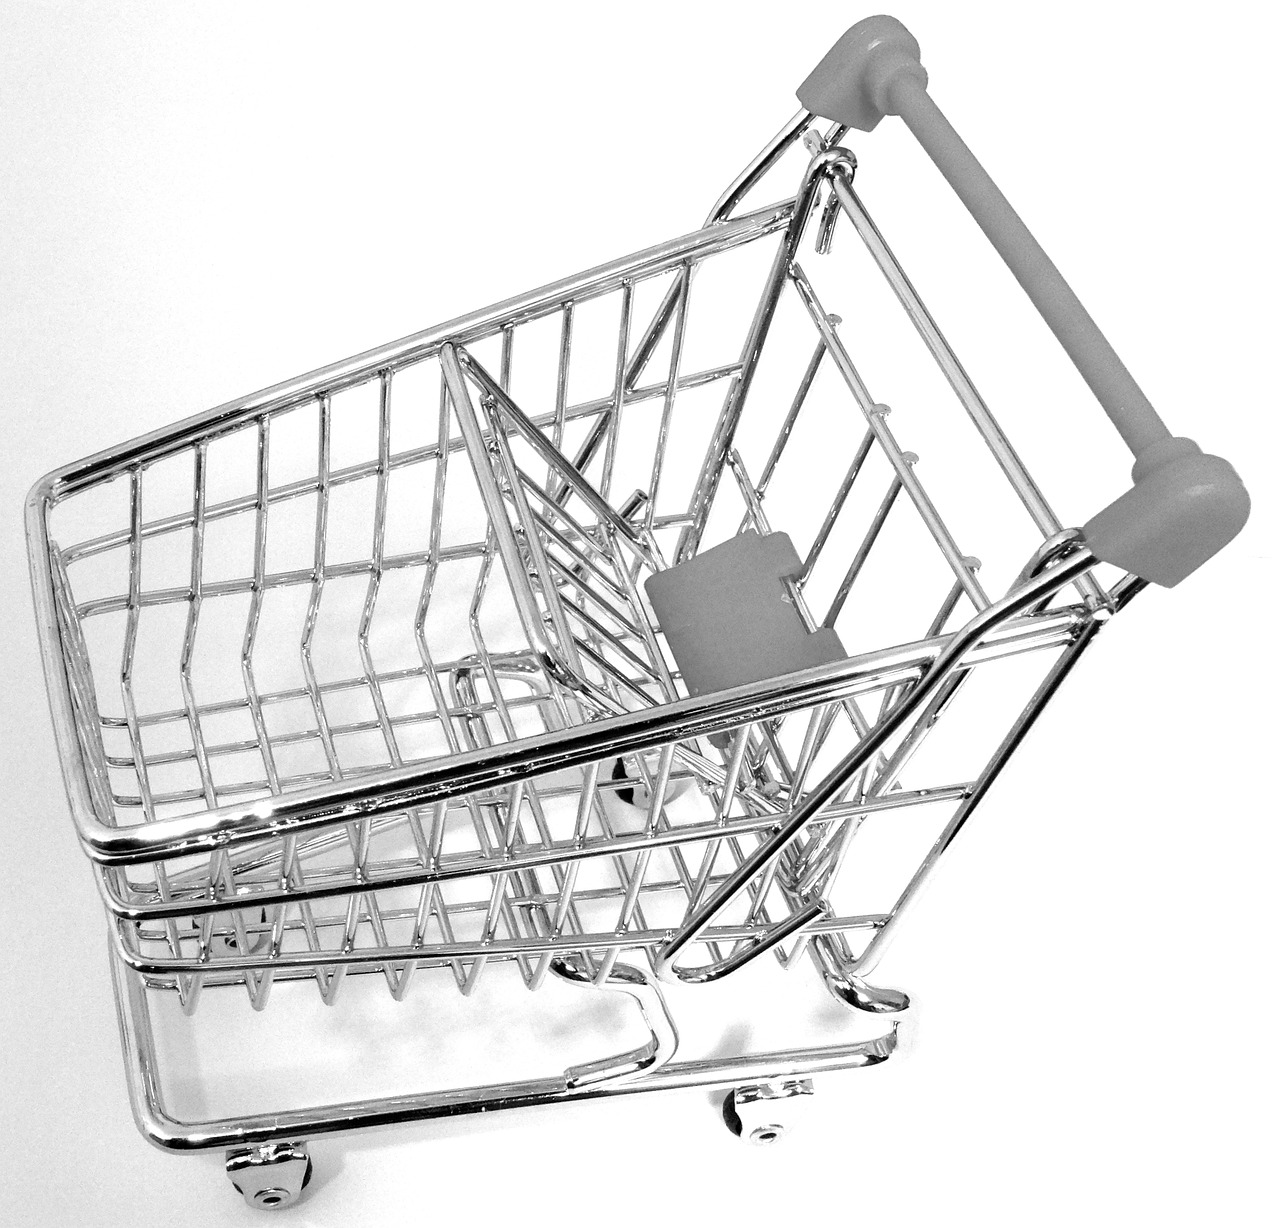 dare purchasing shopping cart free photo